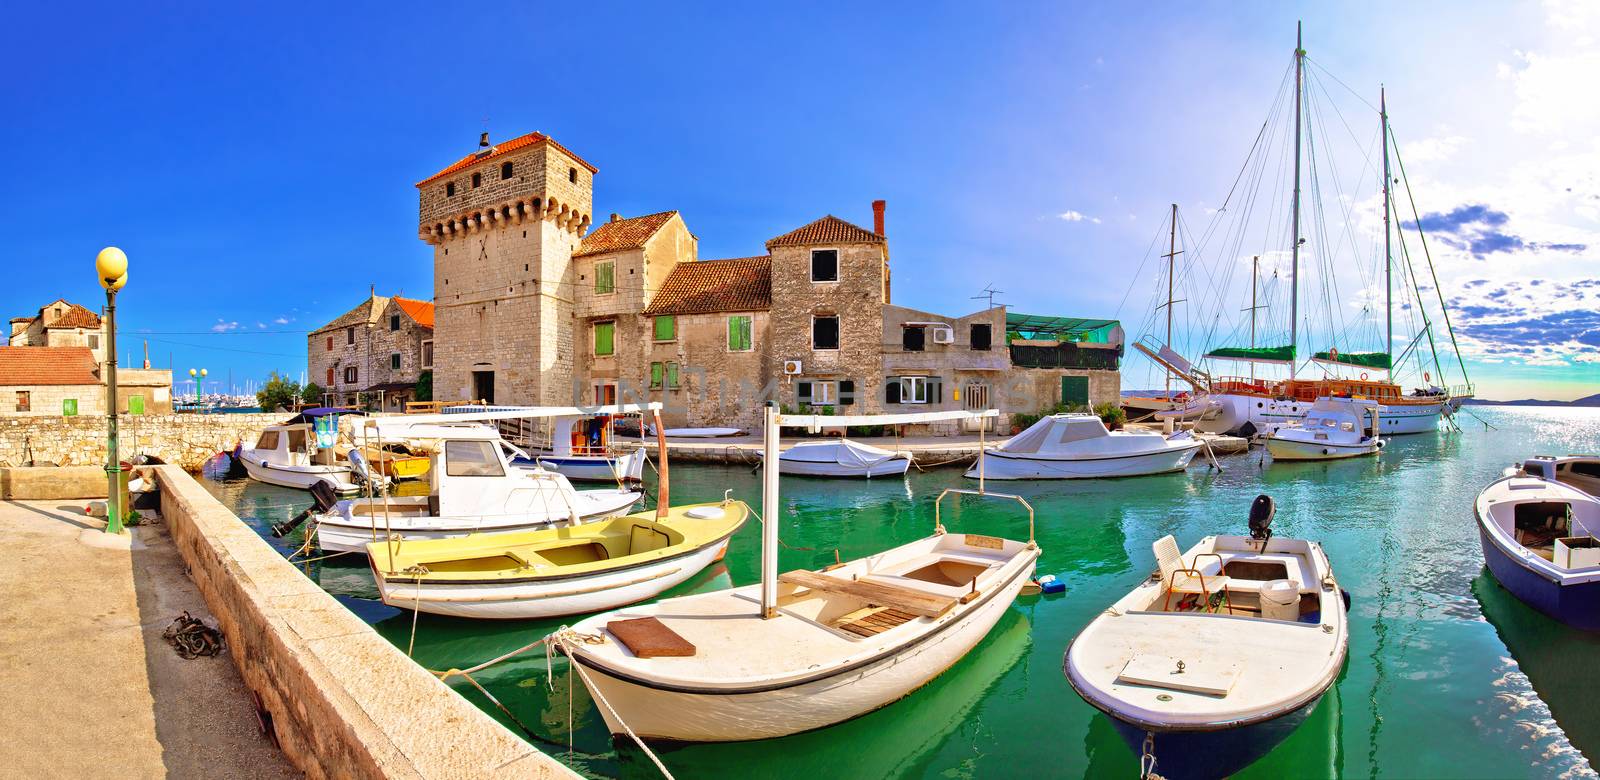 Kastel Gomilica old island town on the sea near Split, Dalmatia region of Croatia